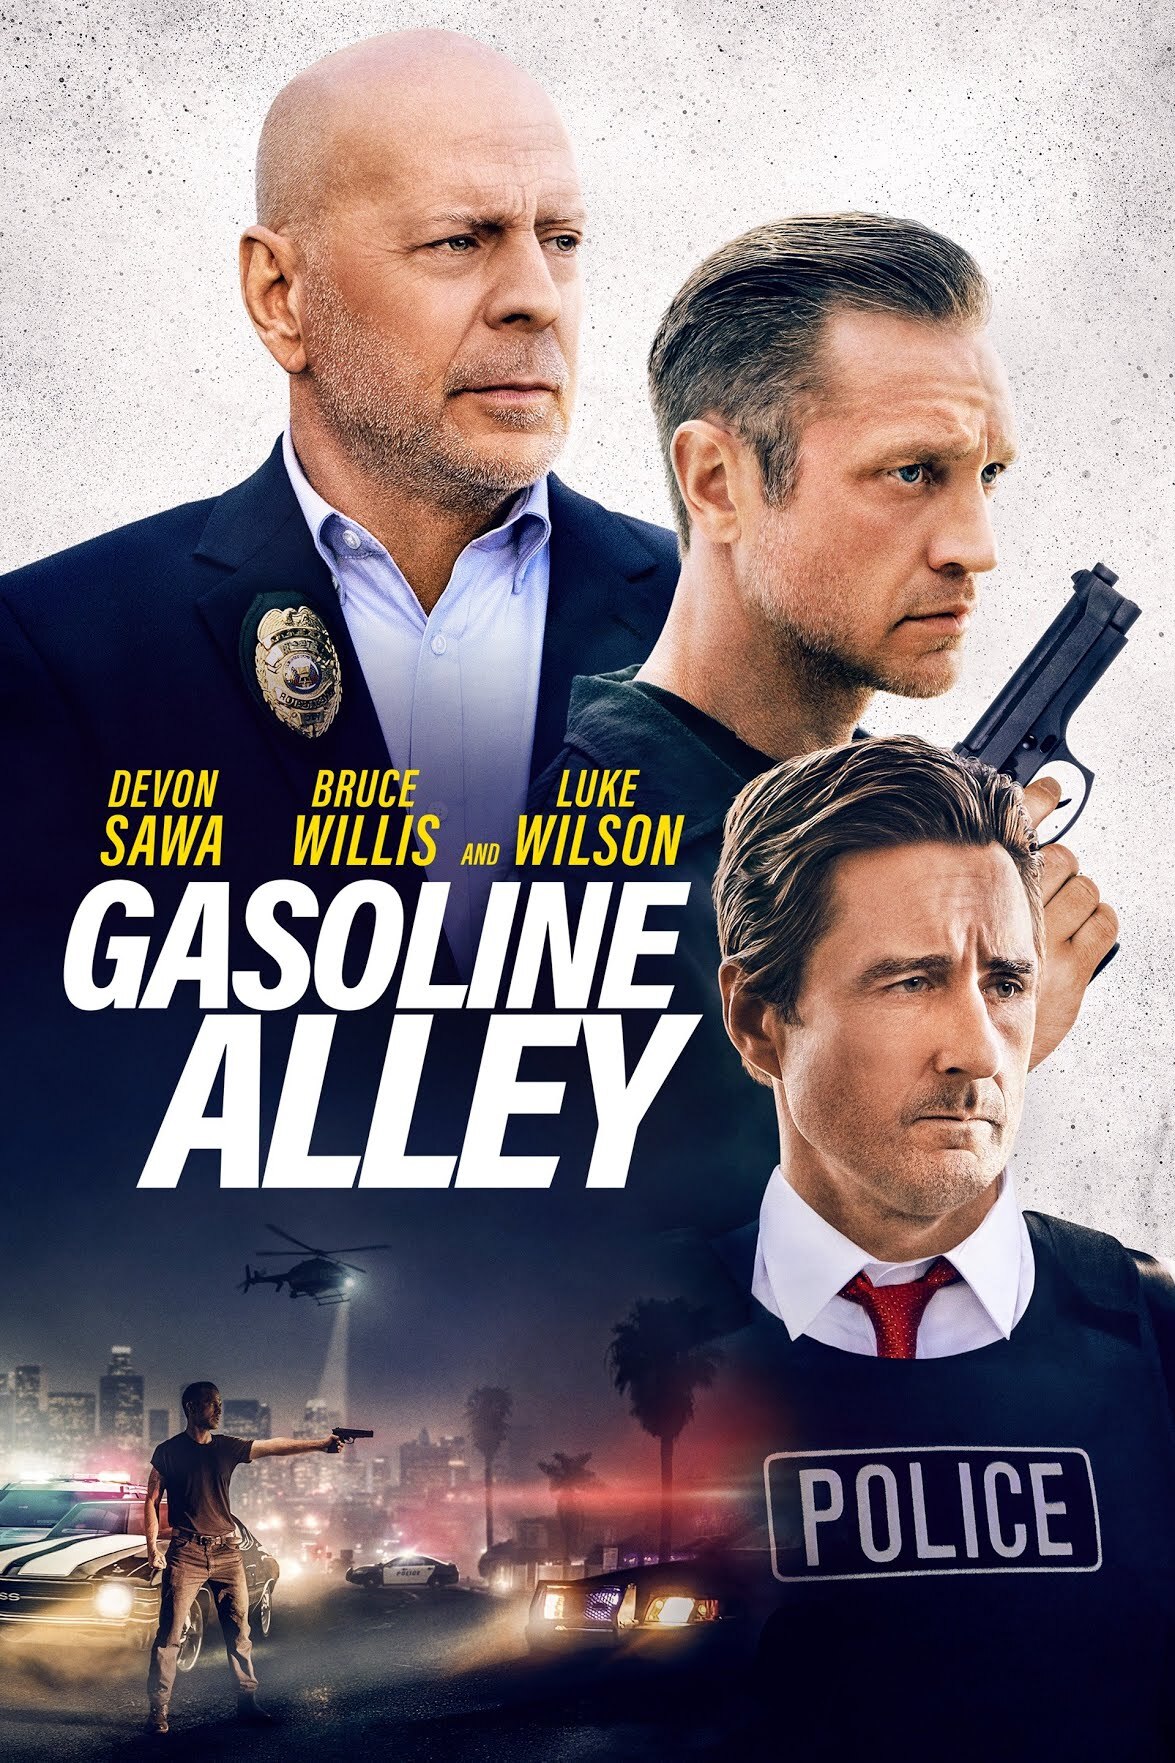 1st Trailer For 'Gasoline Alley' Movie Starring Bruce Willis